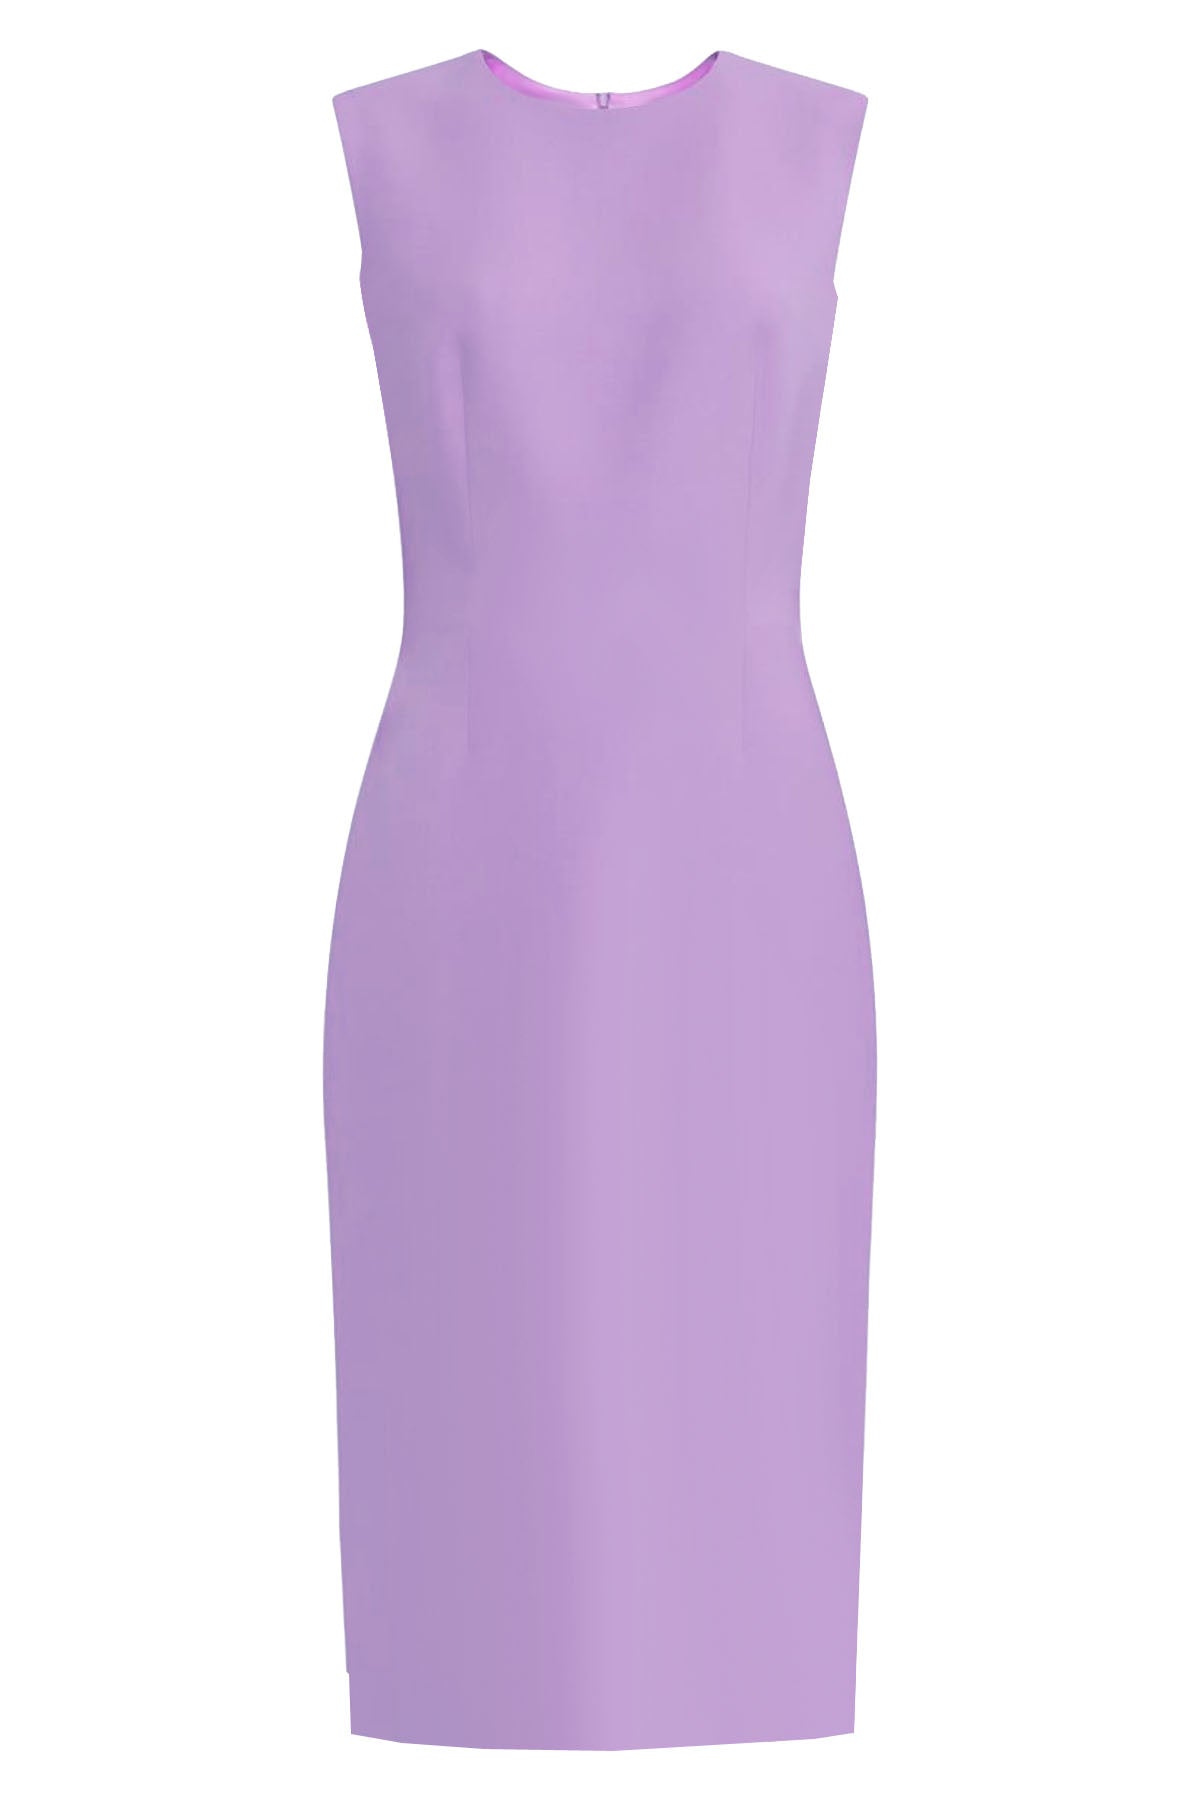 lilac sheath dress